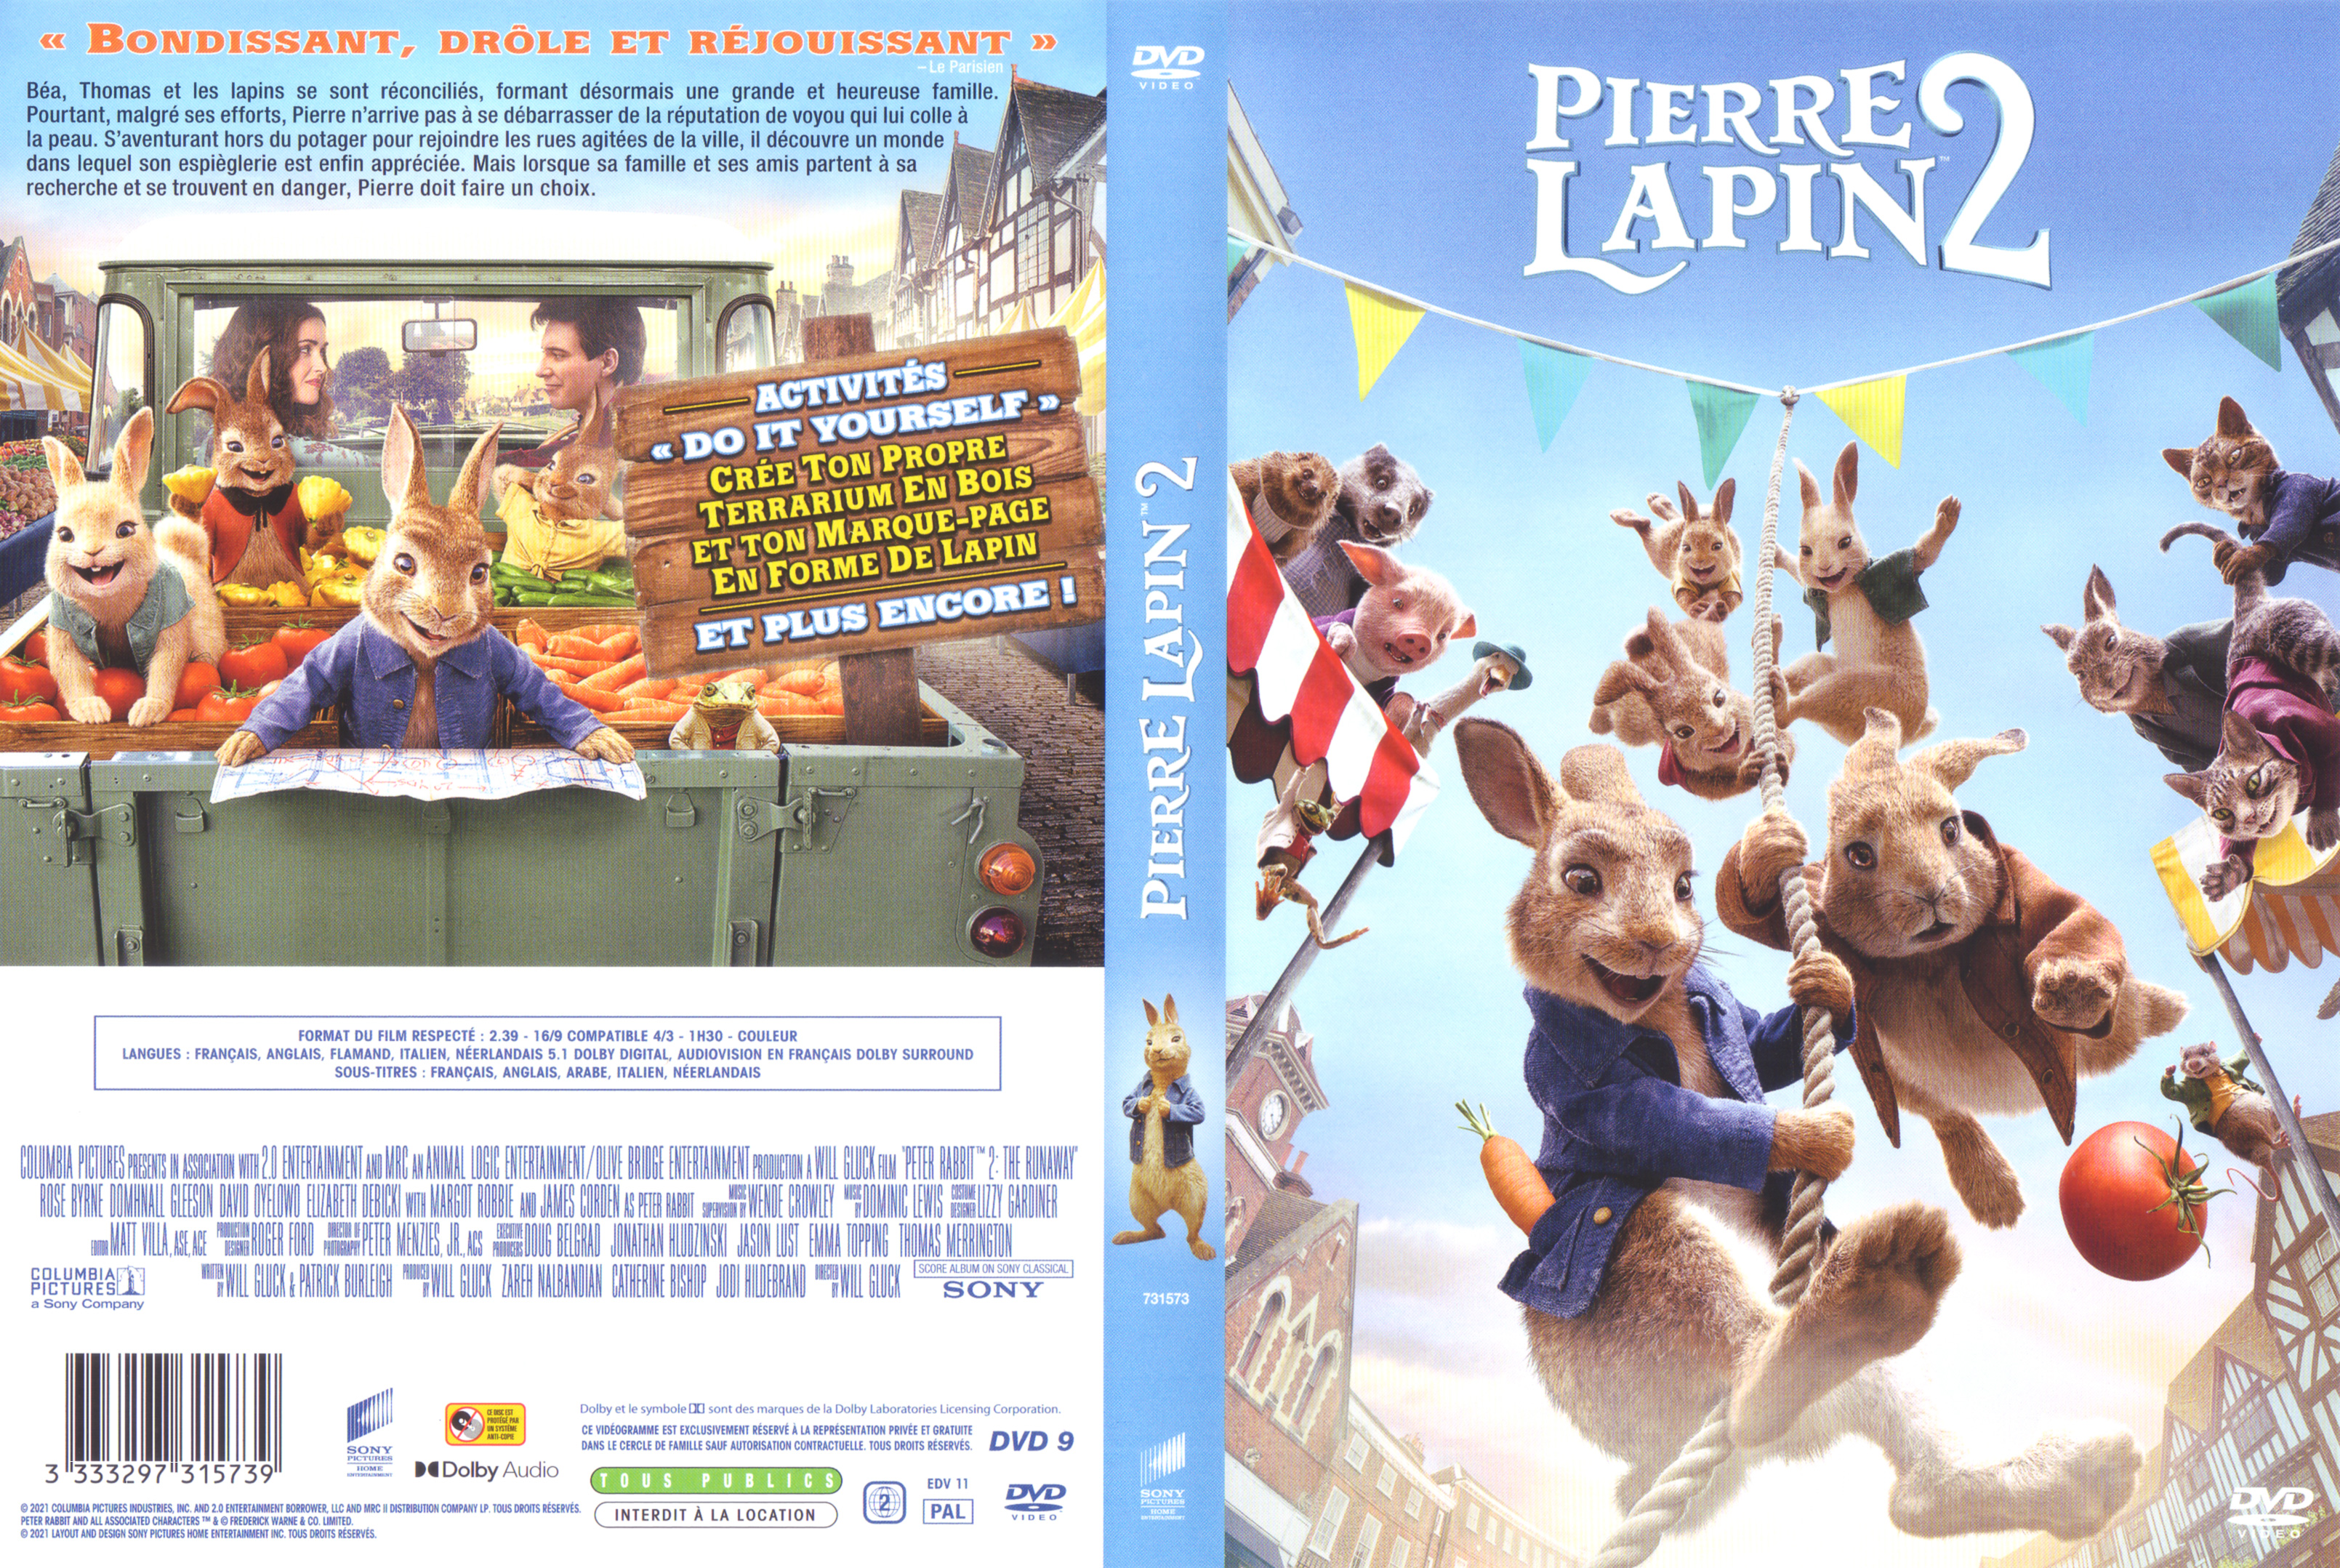 Jaquette DVD Pierre lapin 2